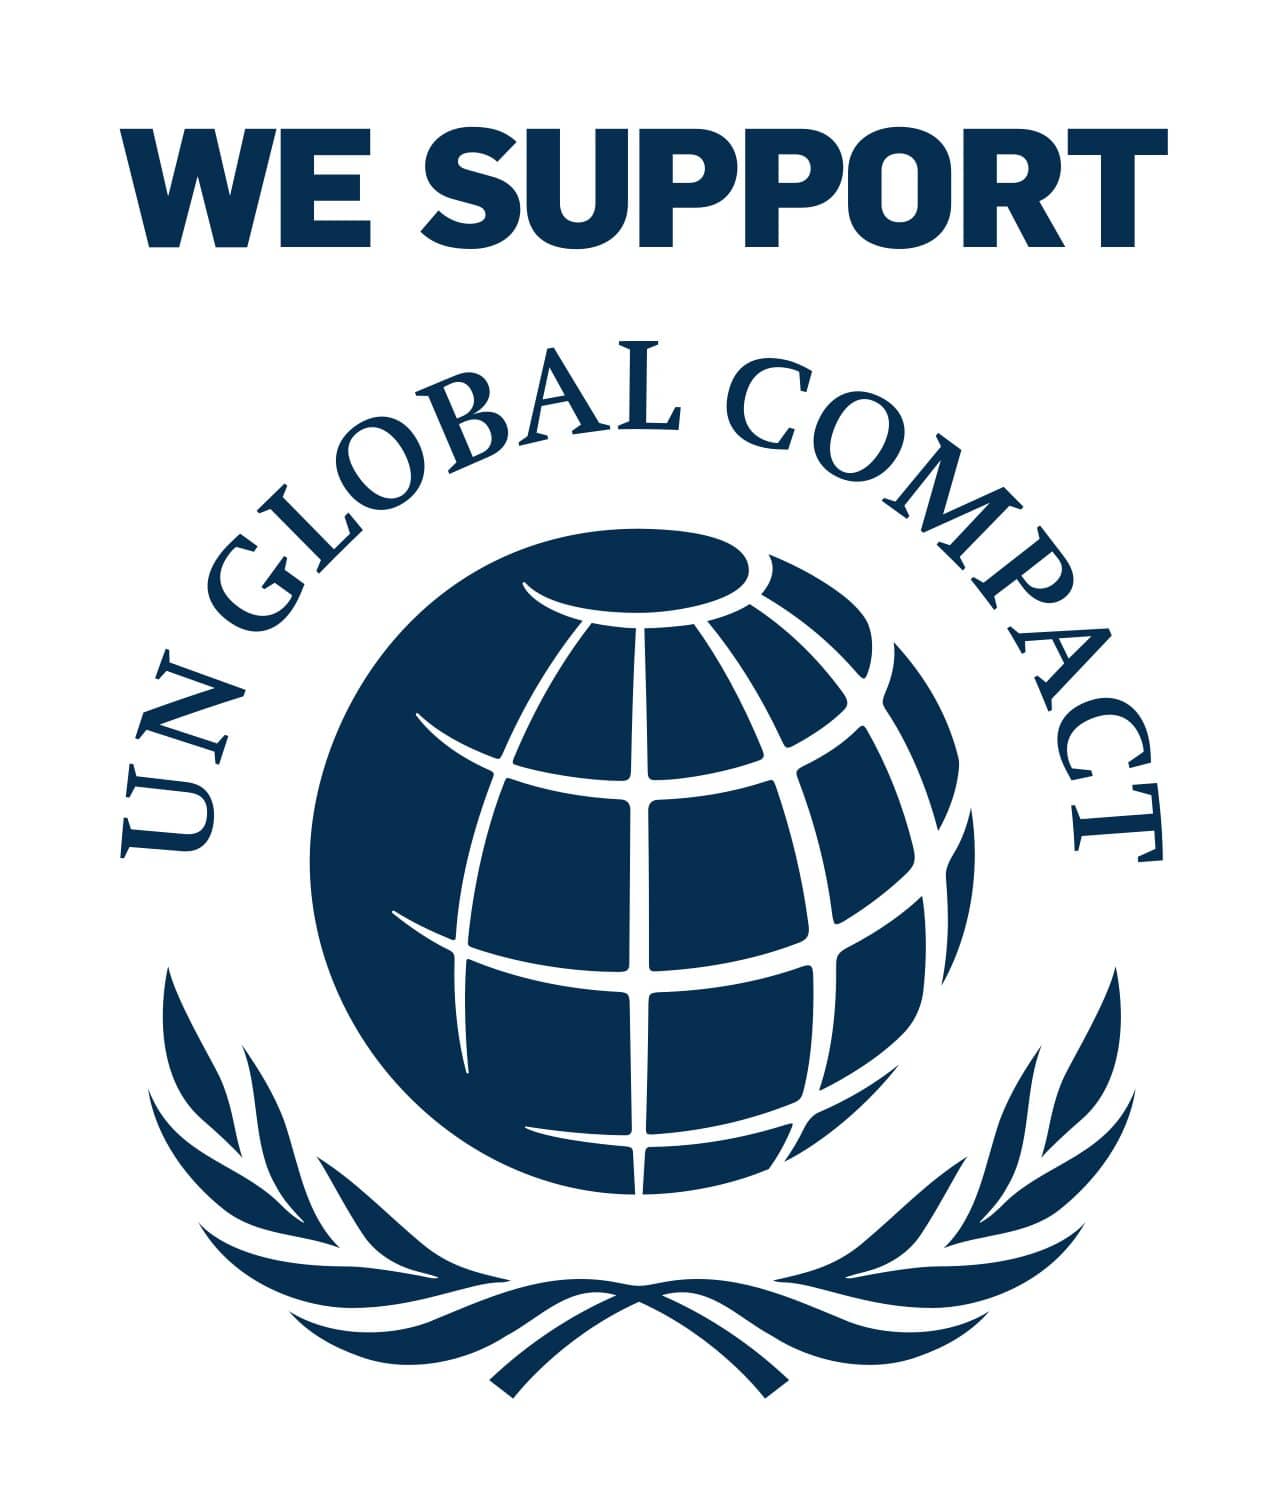 UN Global